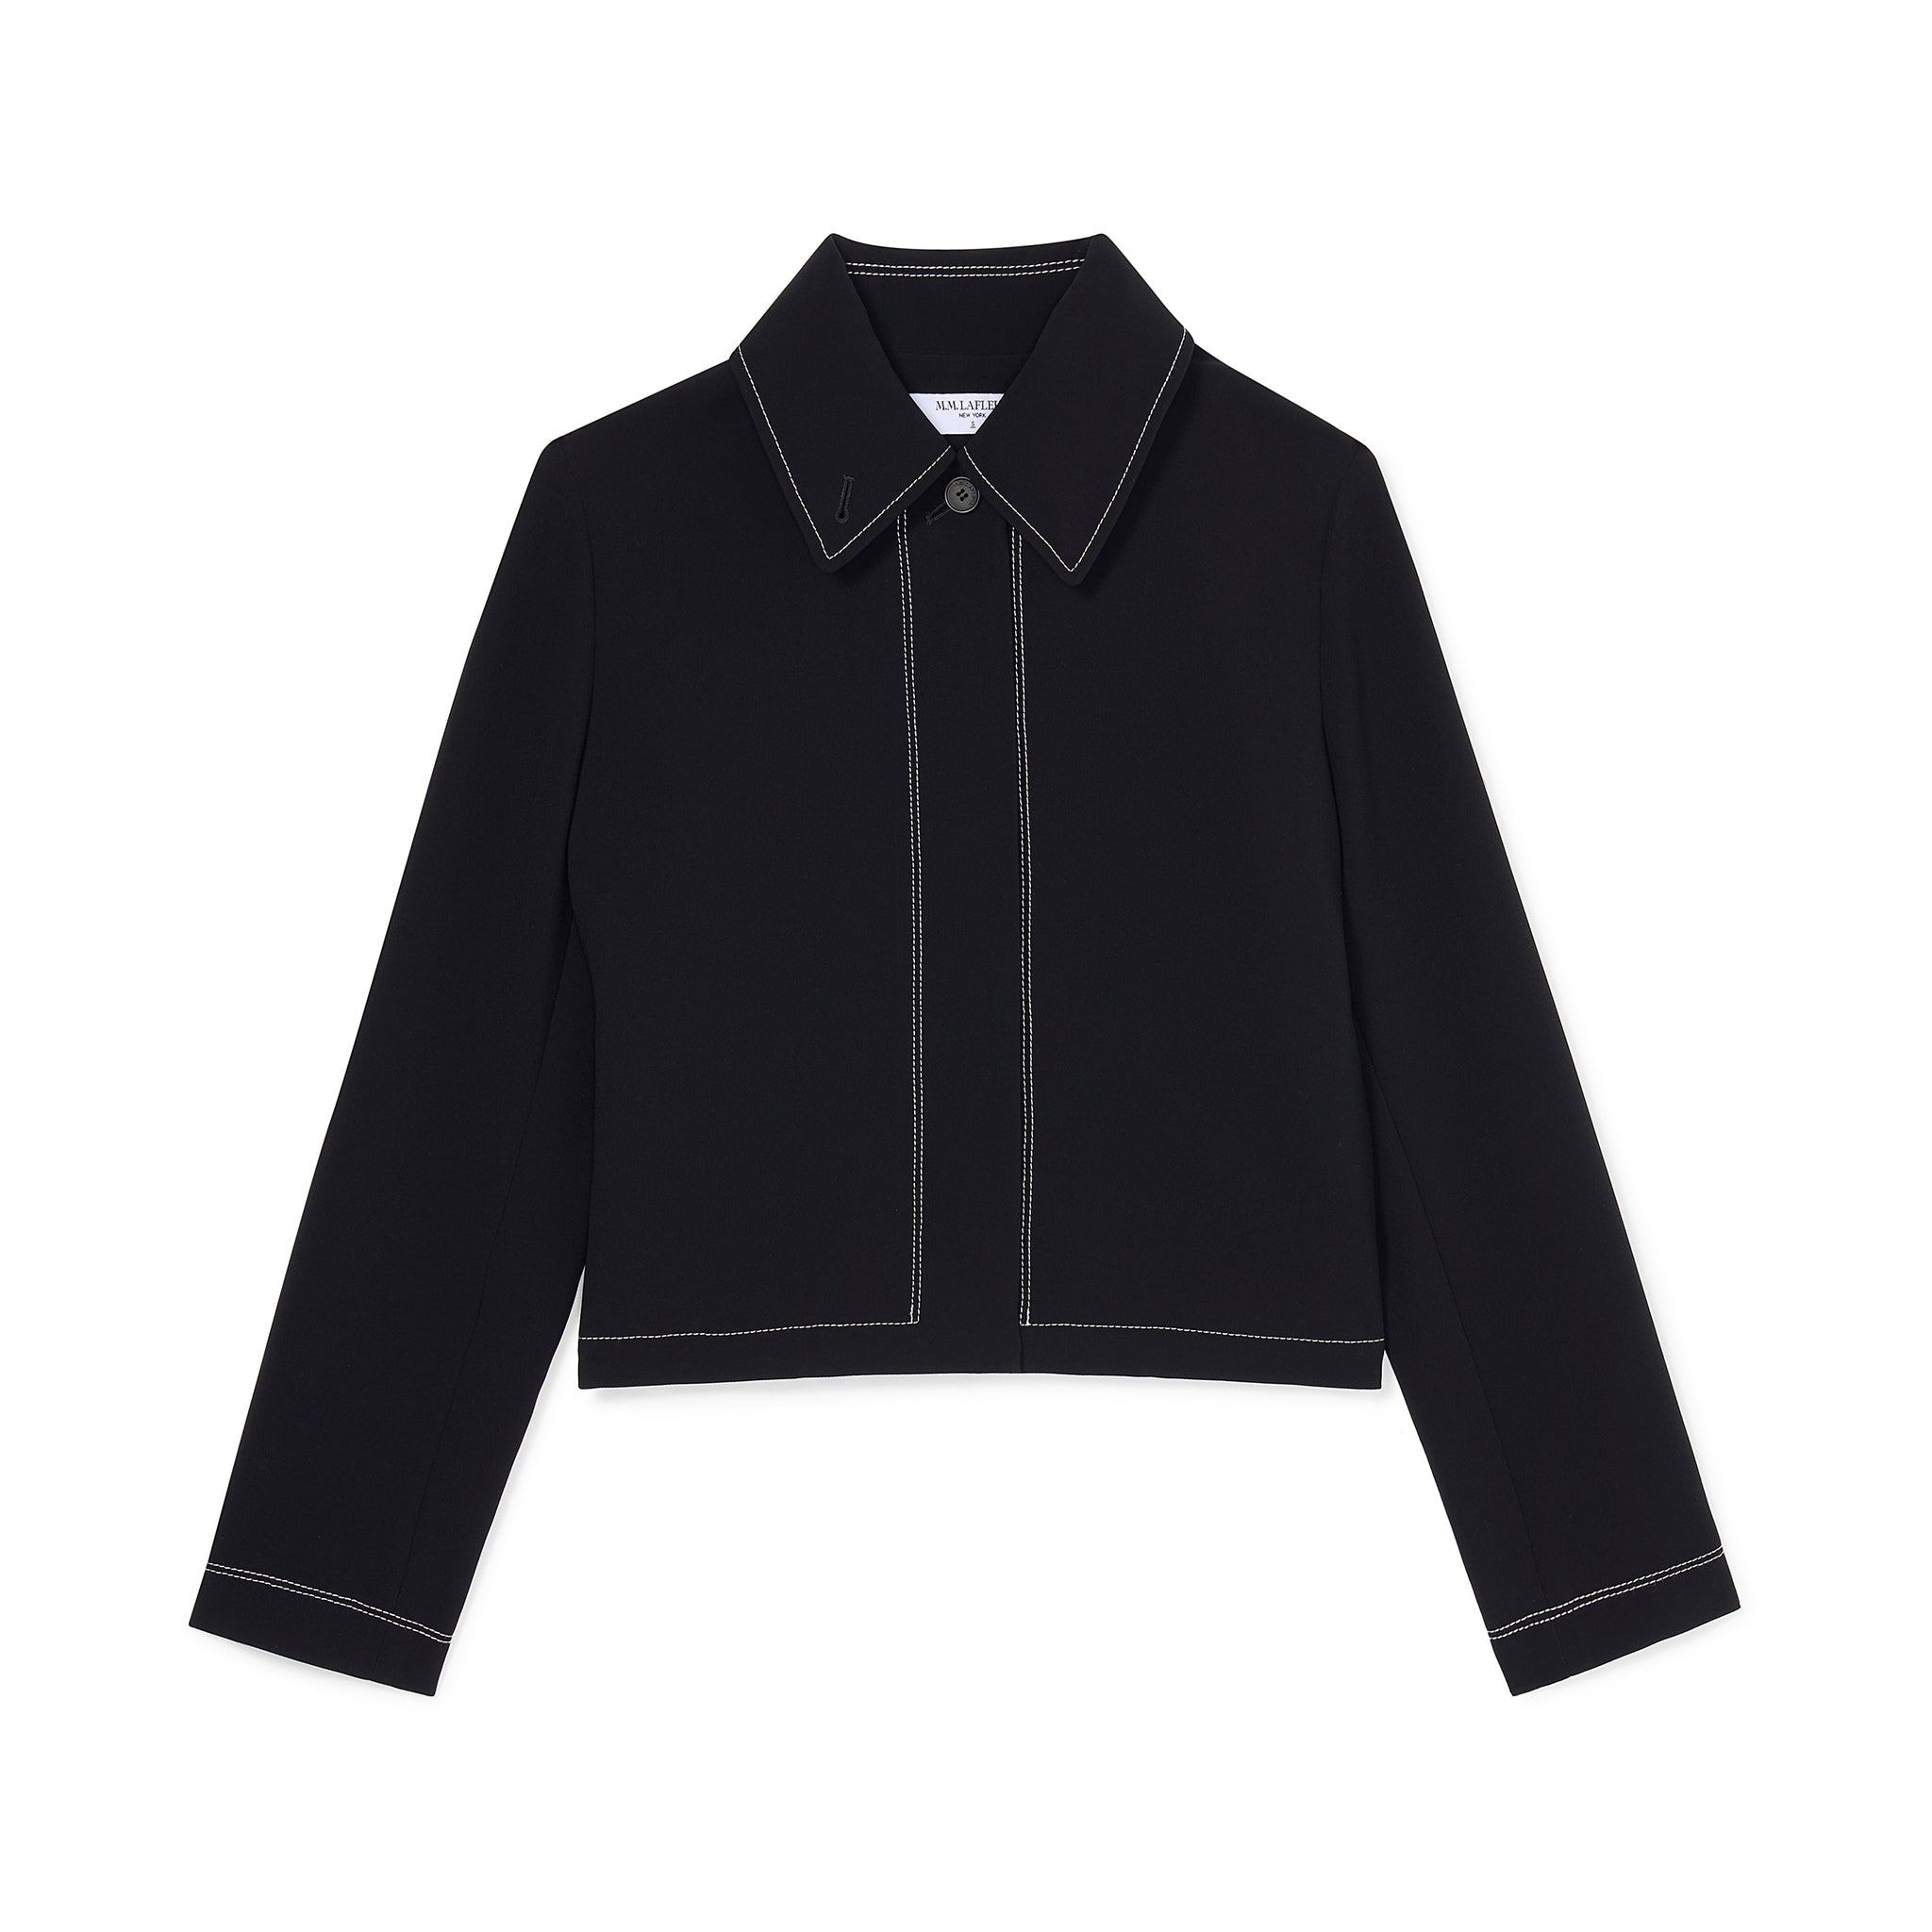 packshot image of the nicky jacket in black 